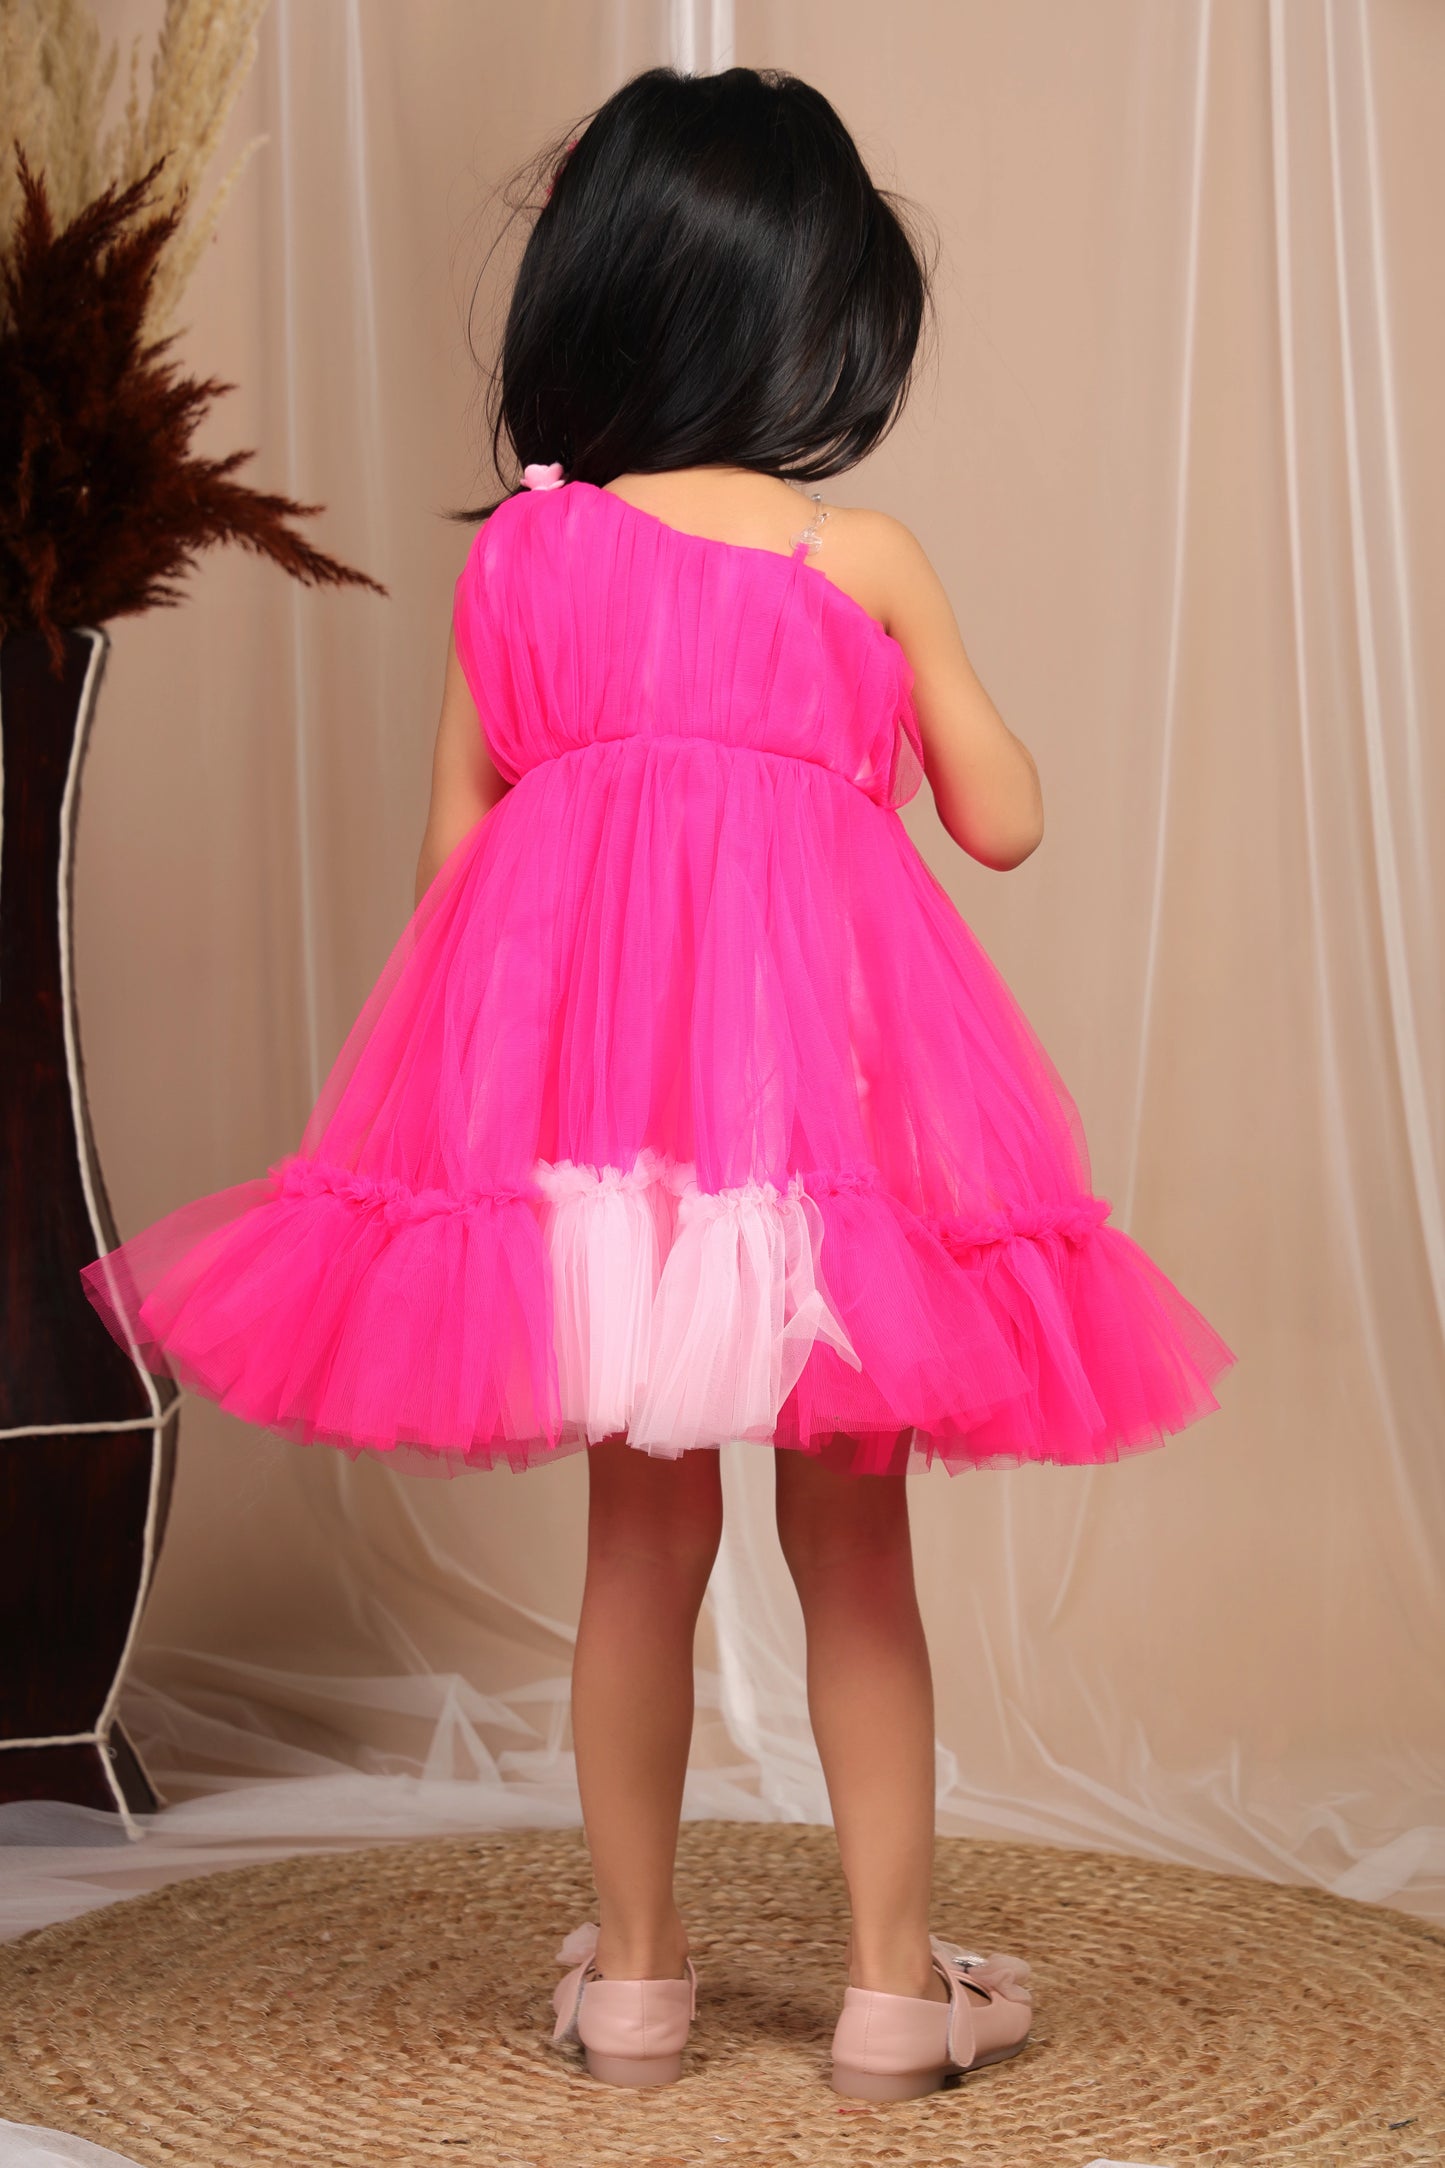 Barbie Pink Glamour Dress